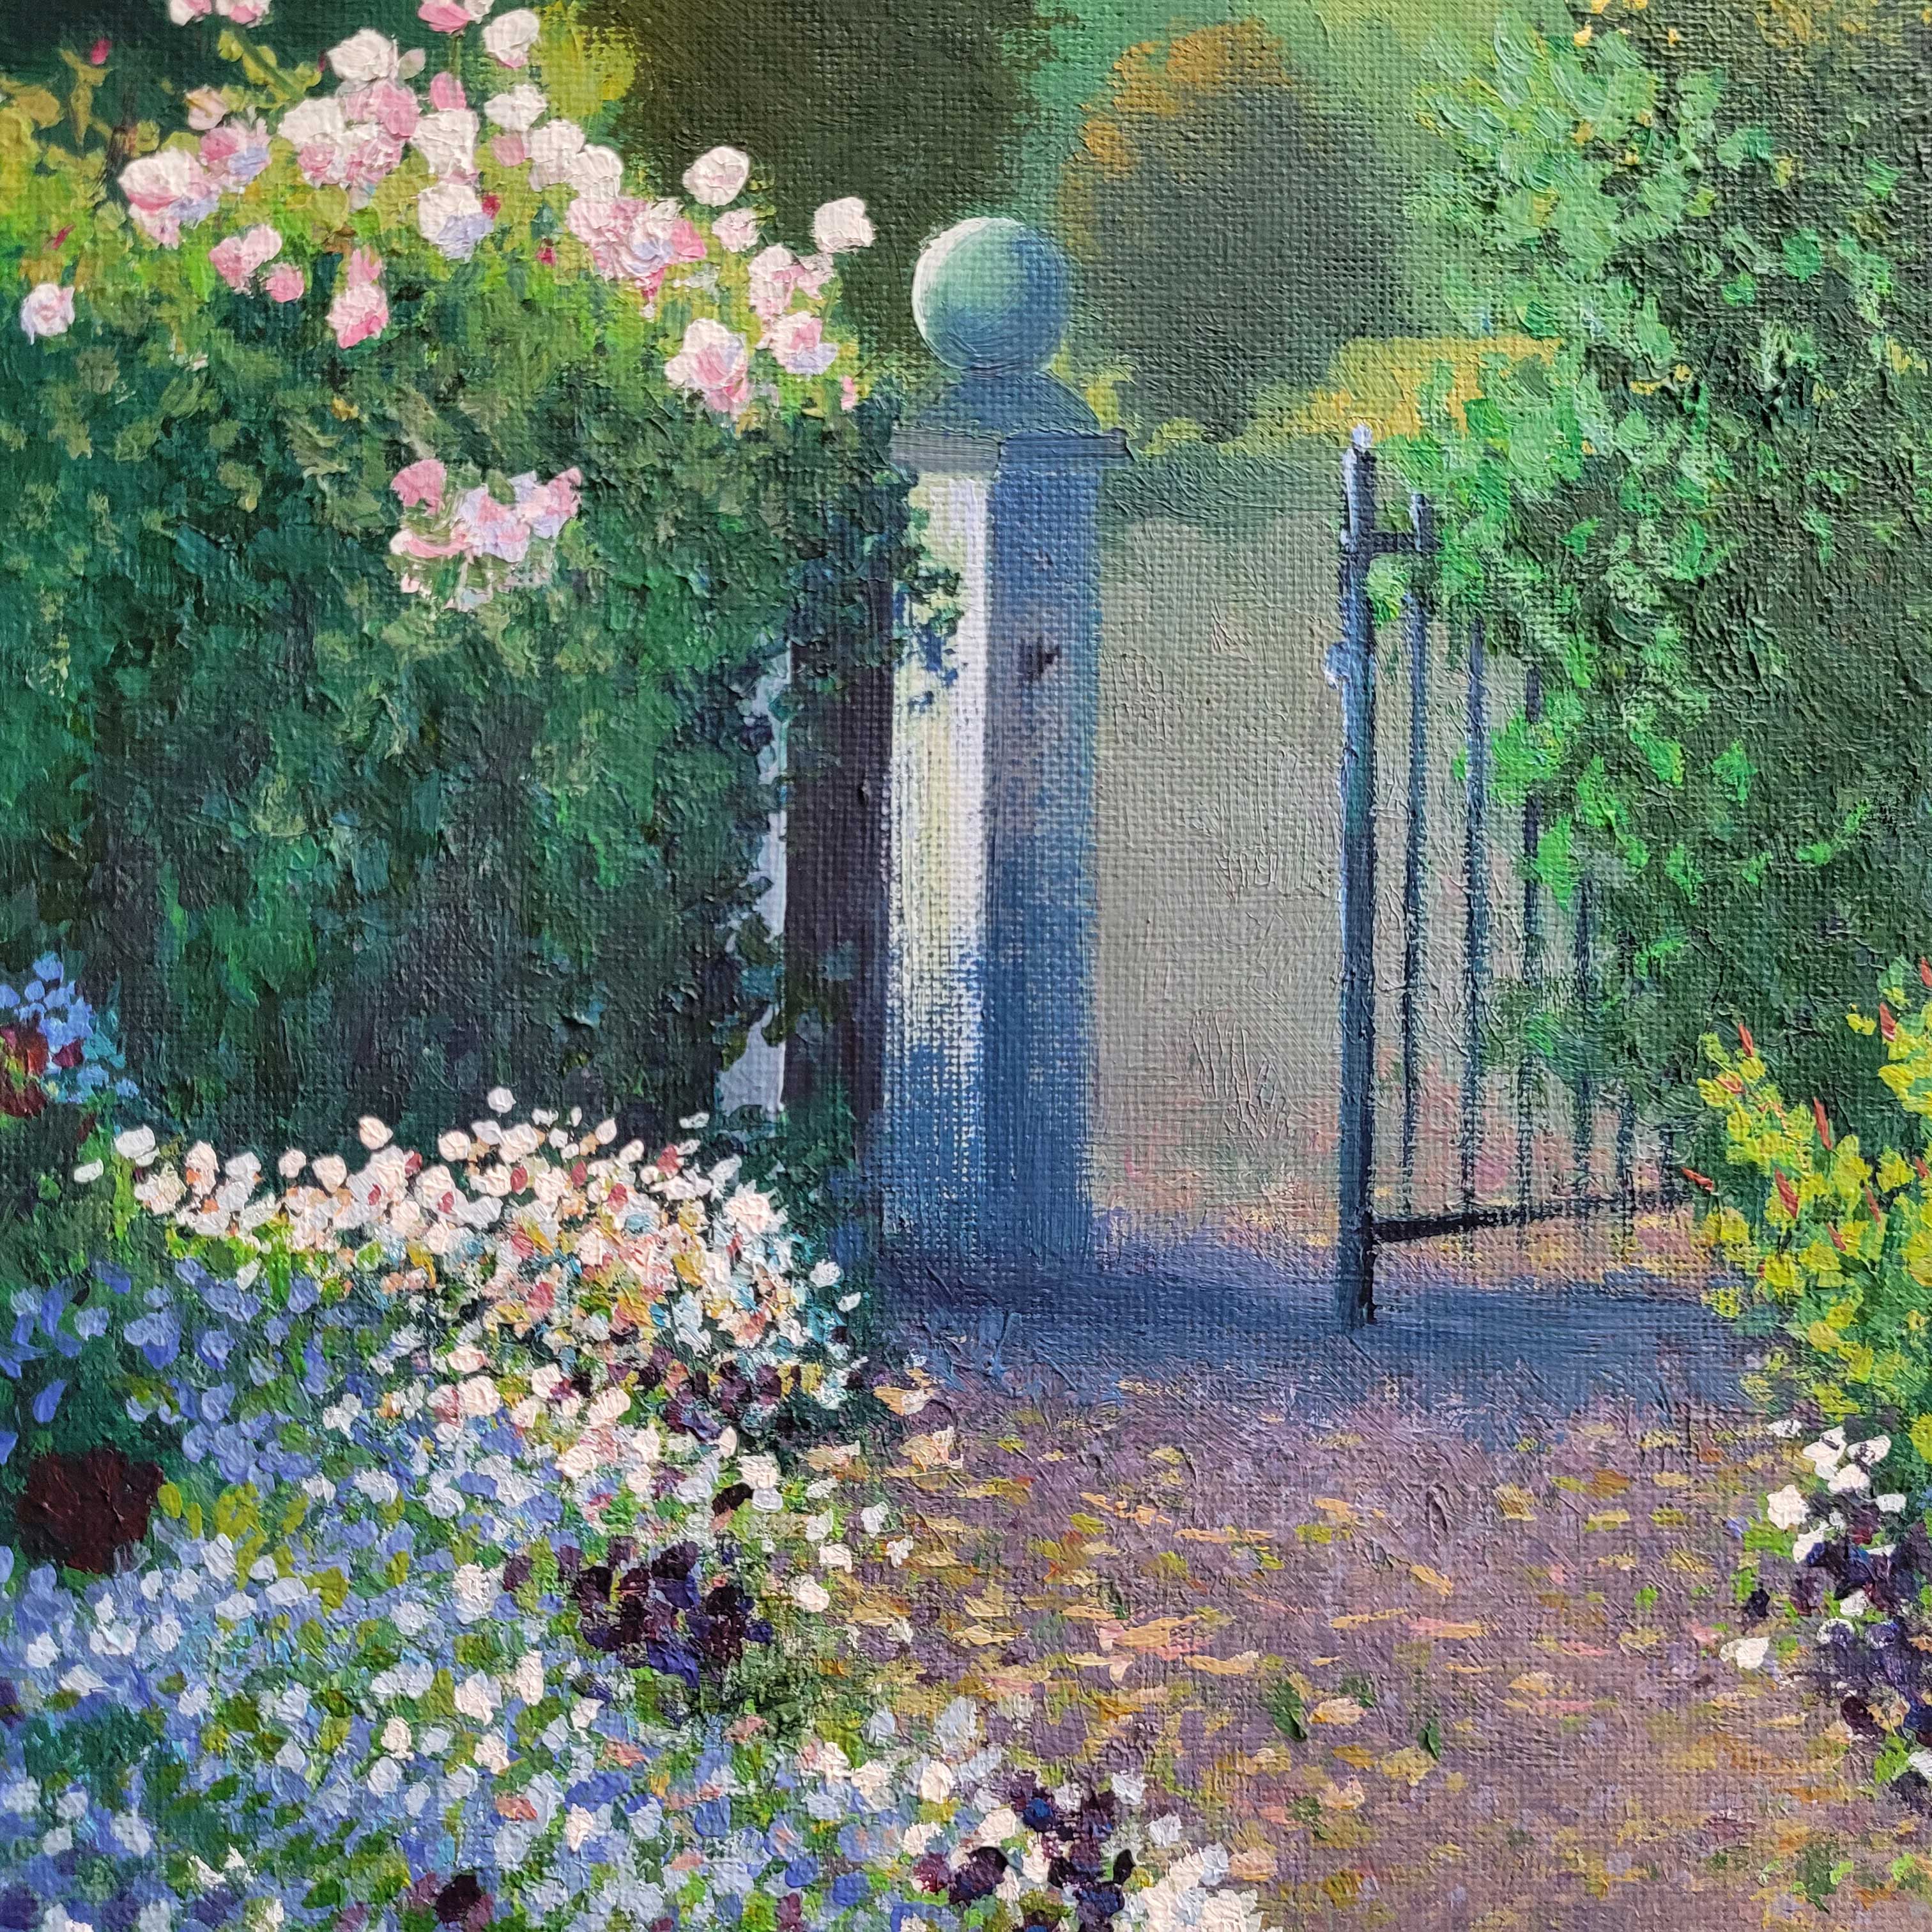 The Artist's Garden